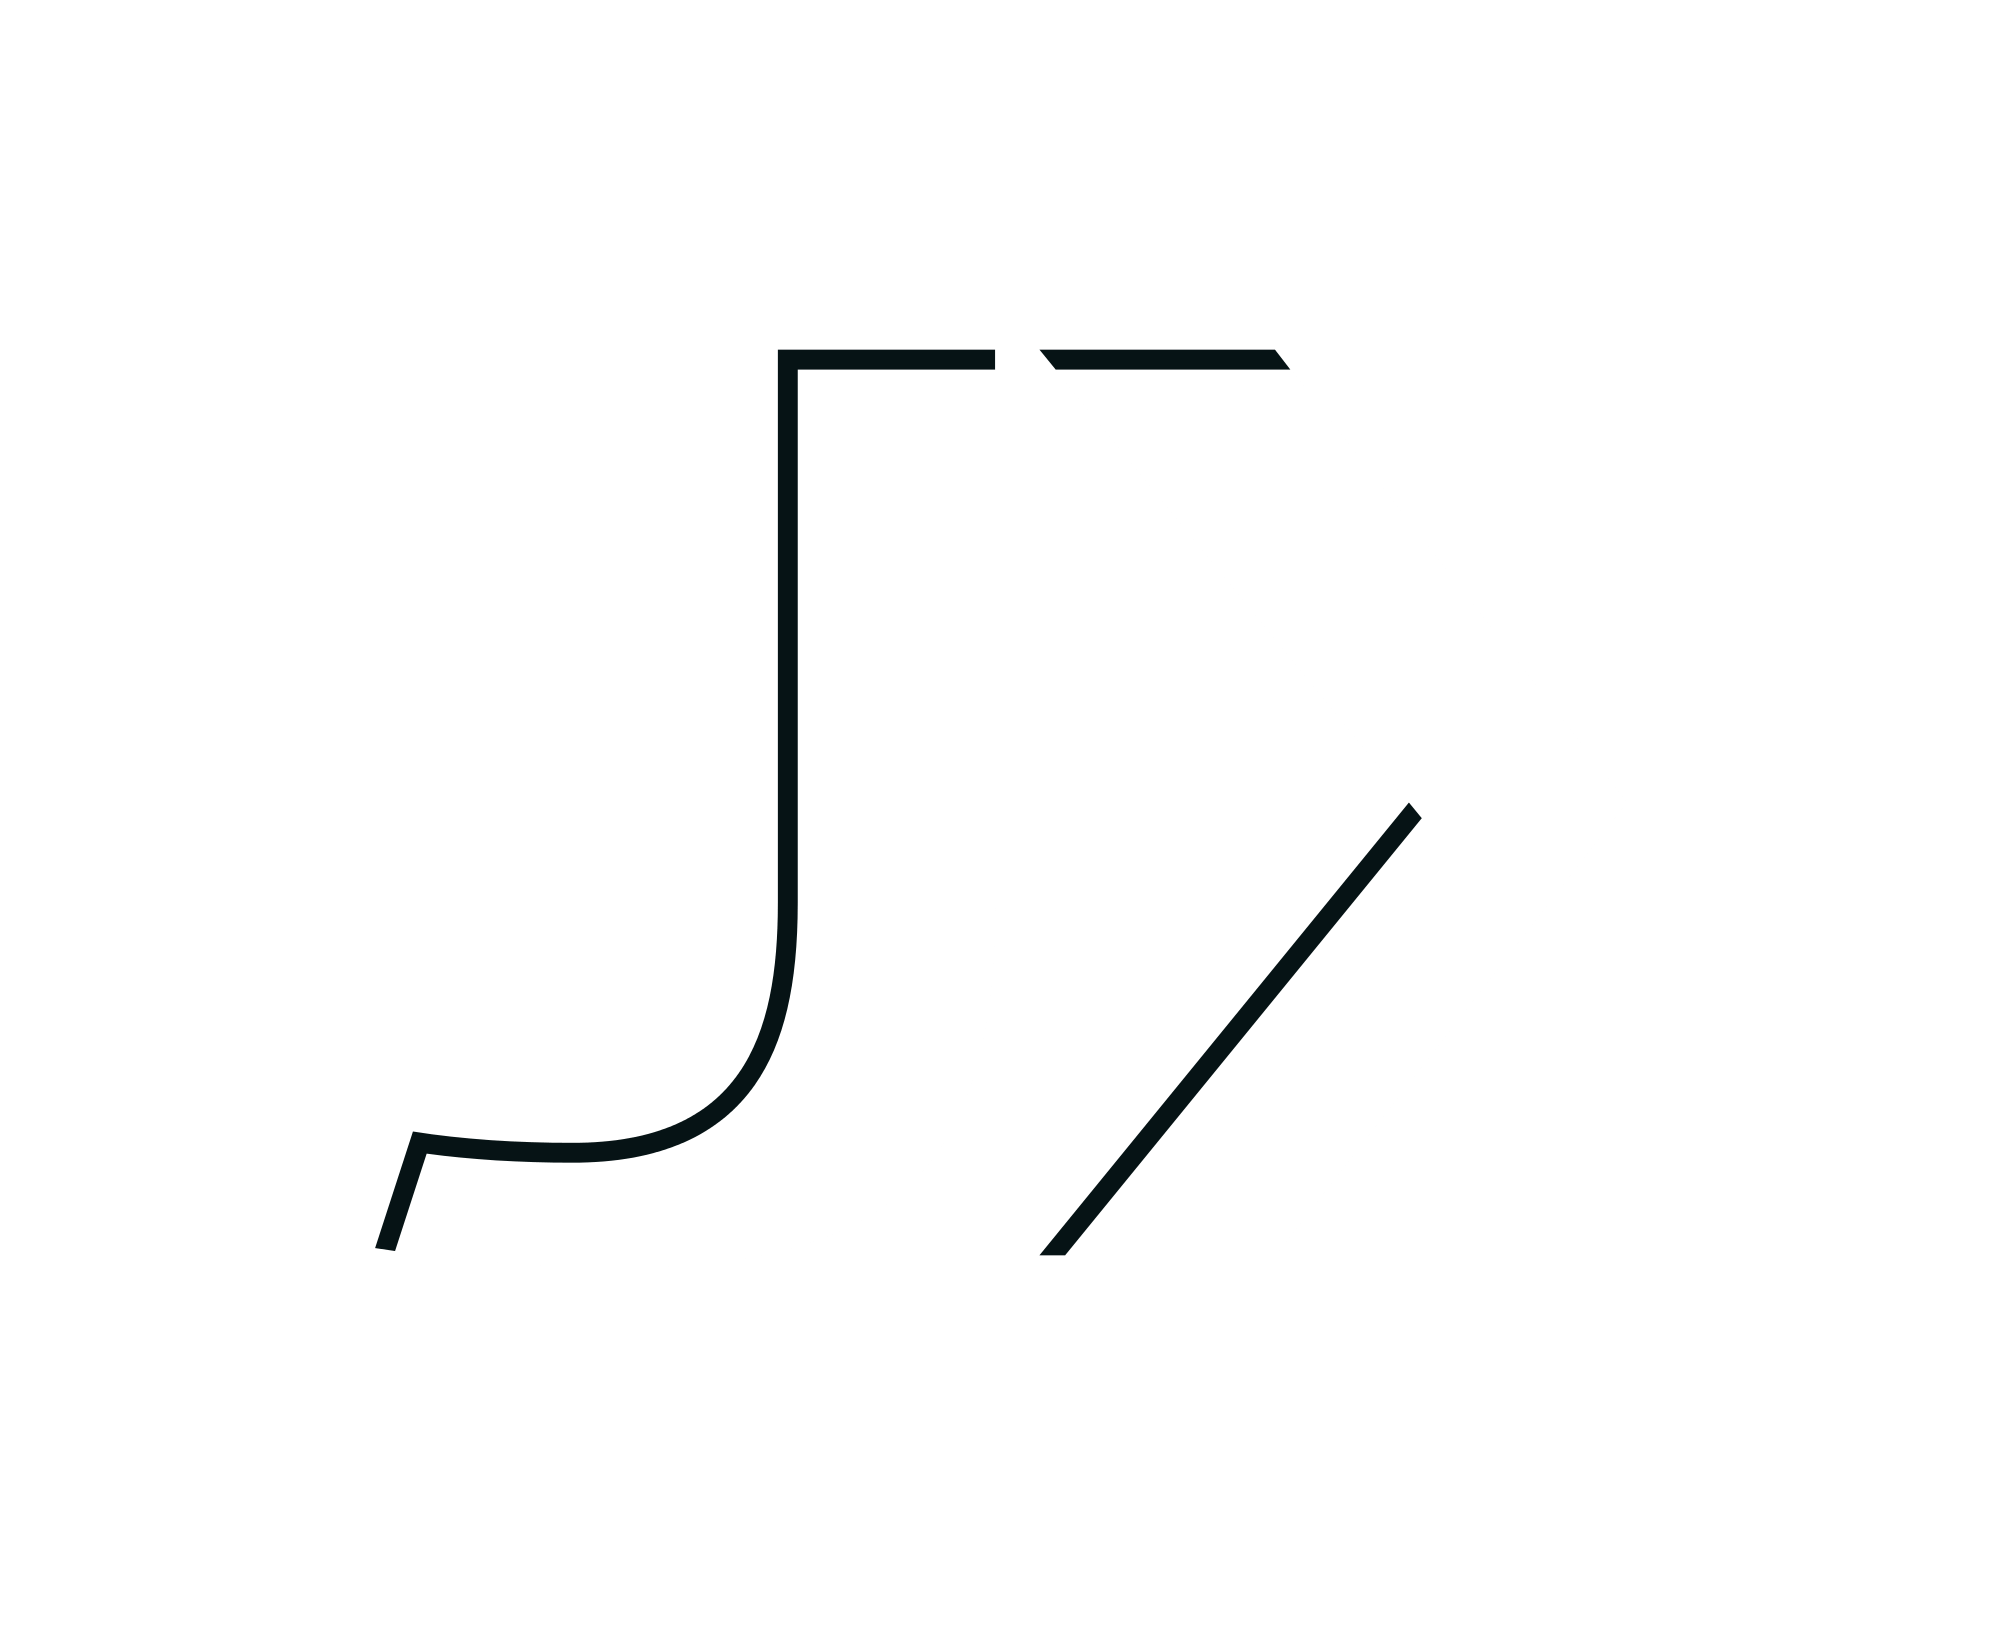 JX Logo - JX GROUP logo.svg